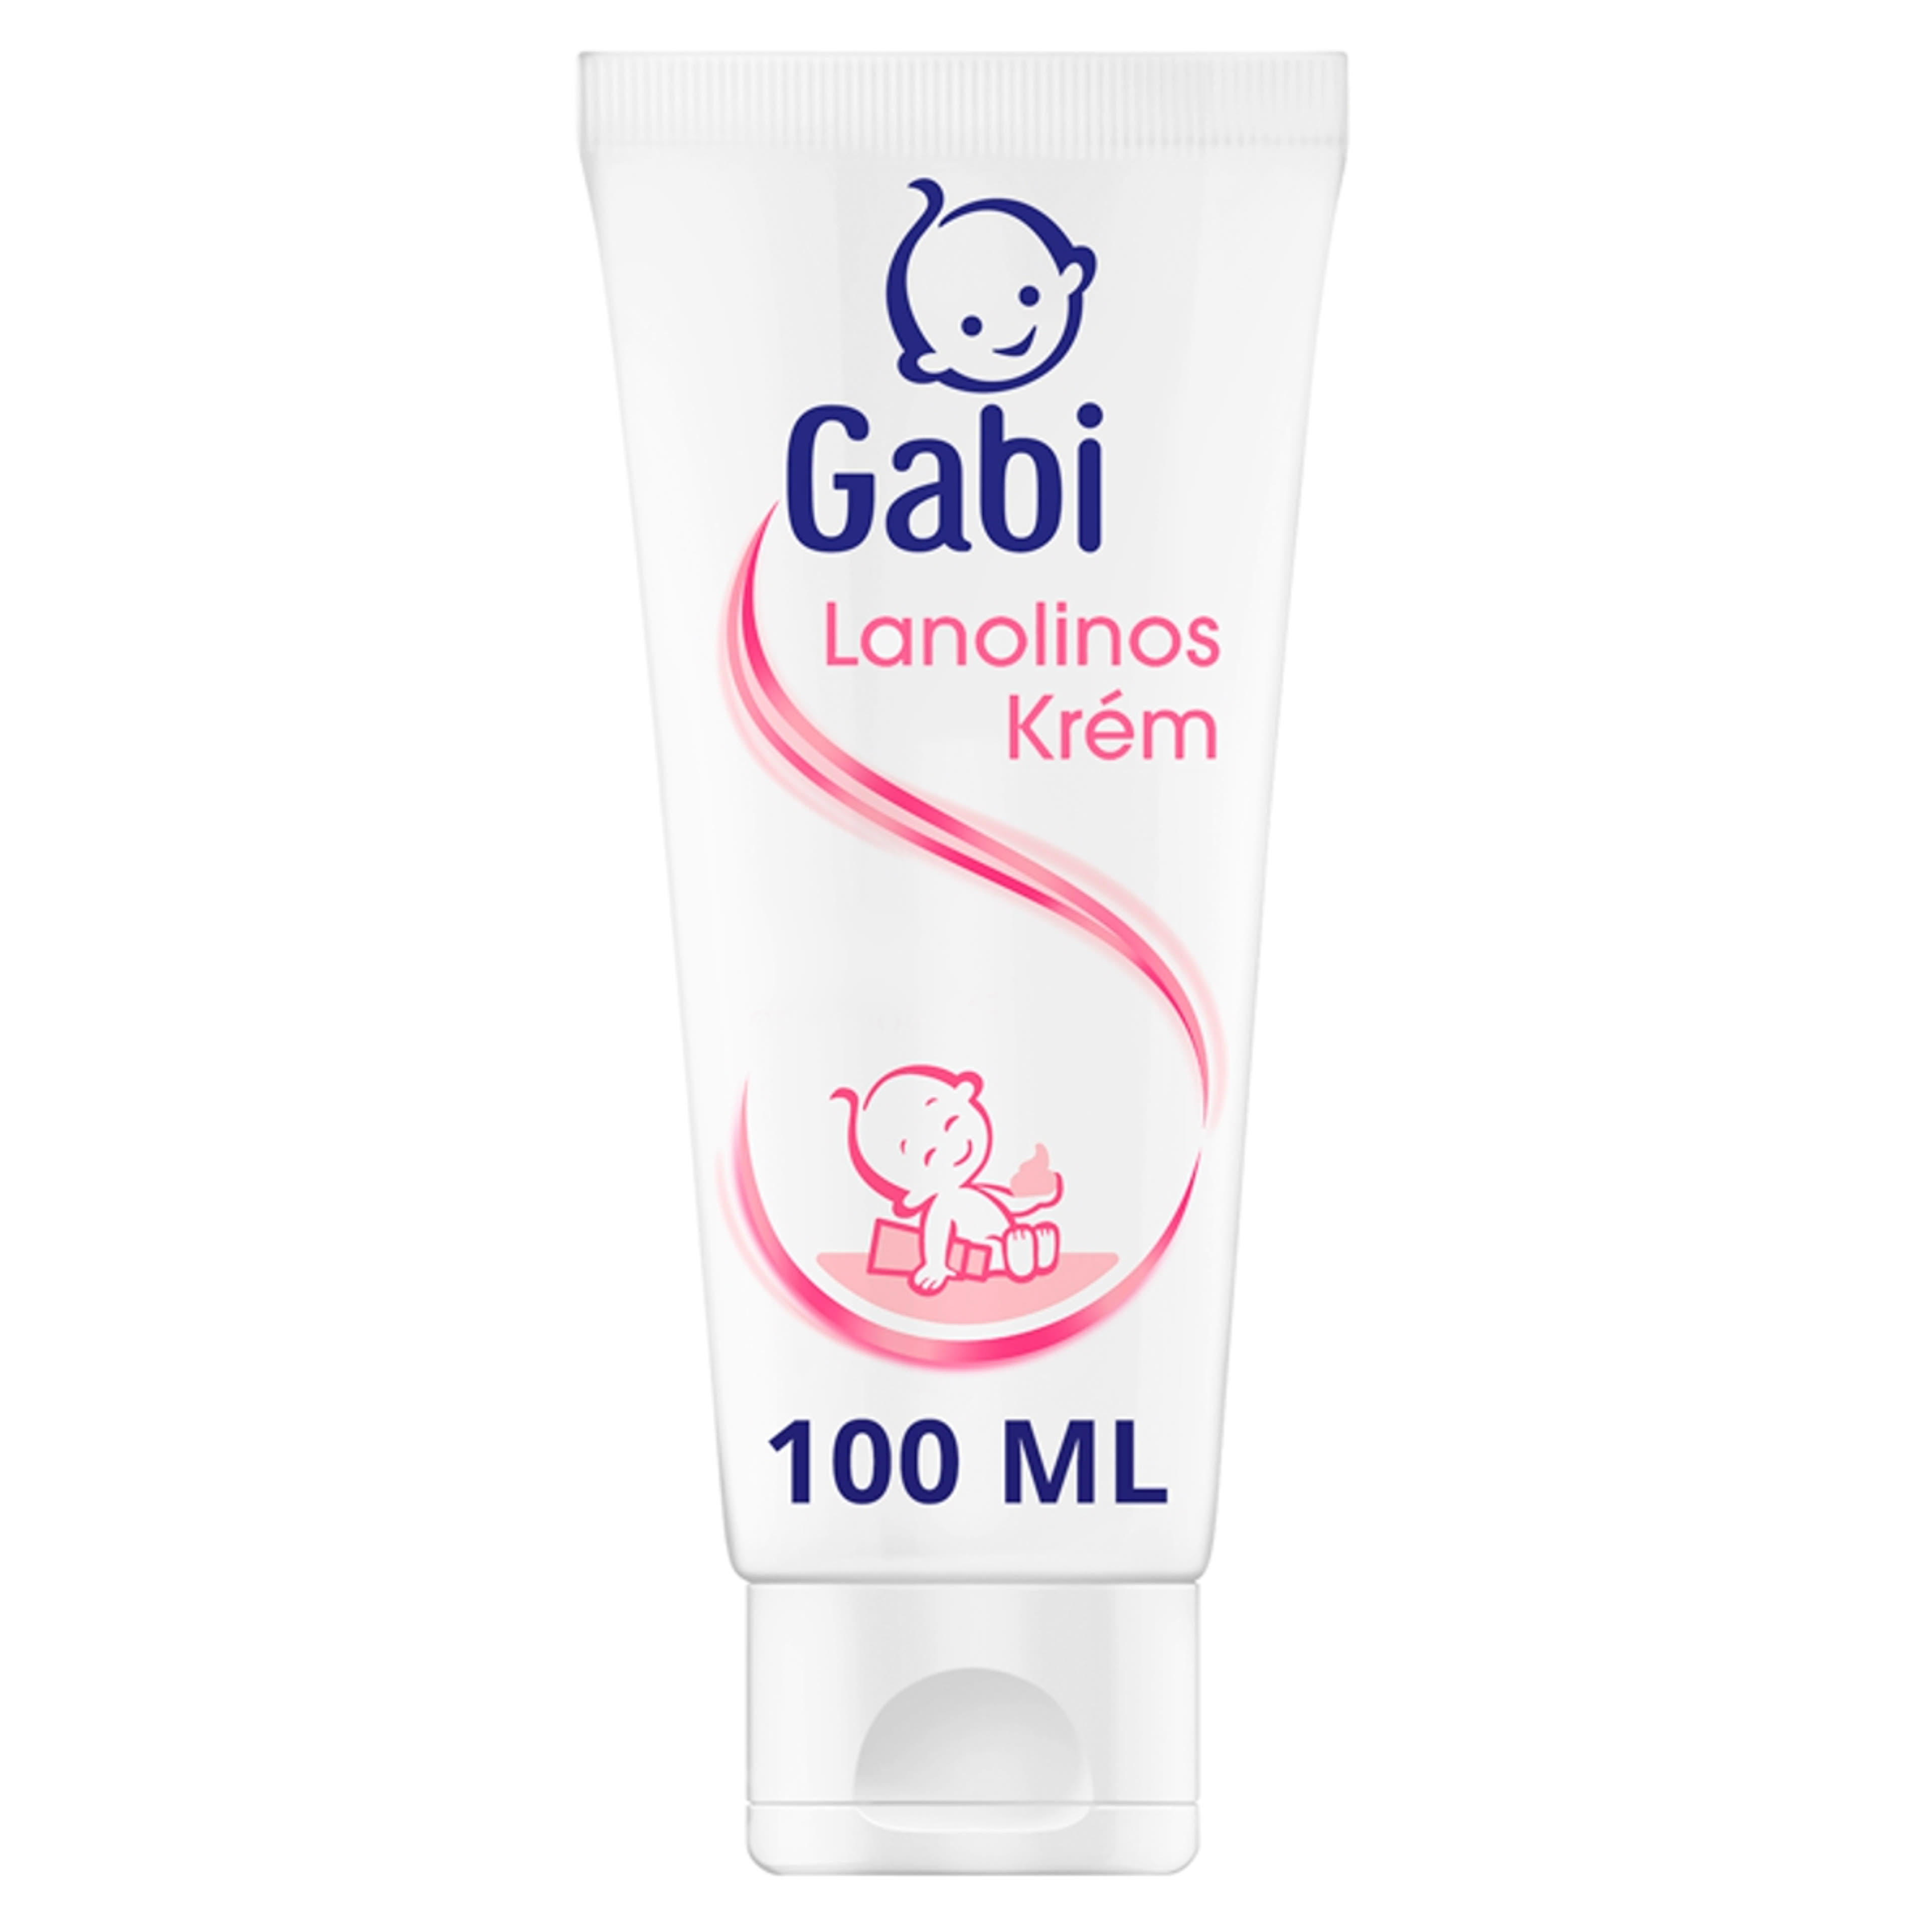 Gabi Lanolinos Babakrém - 100 ml-2